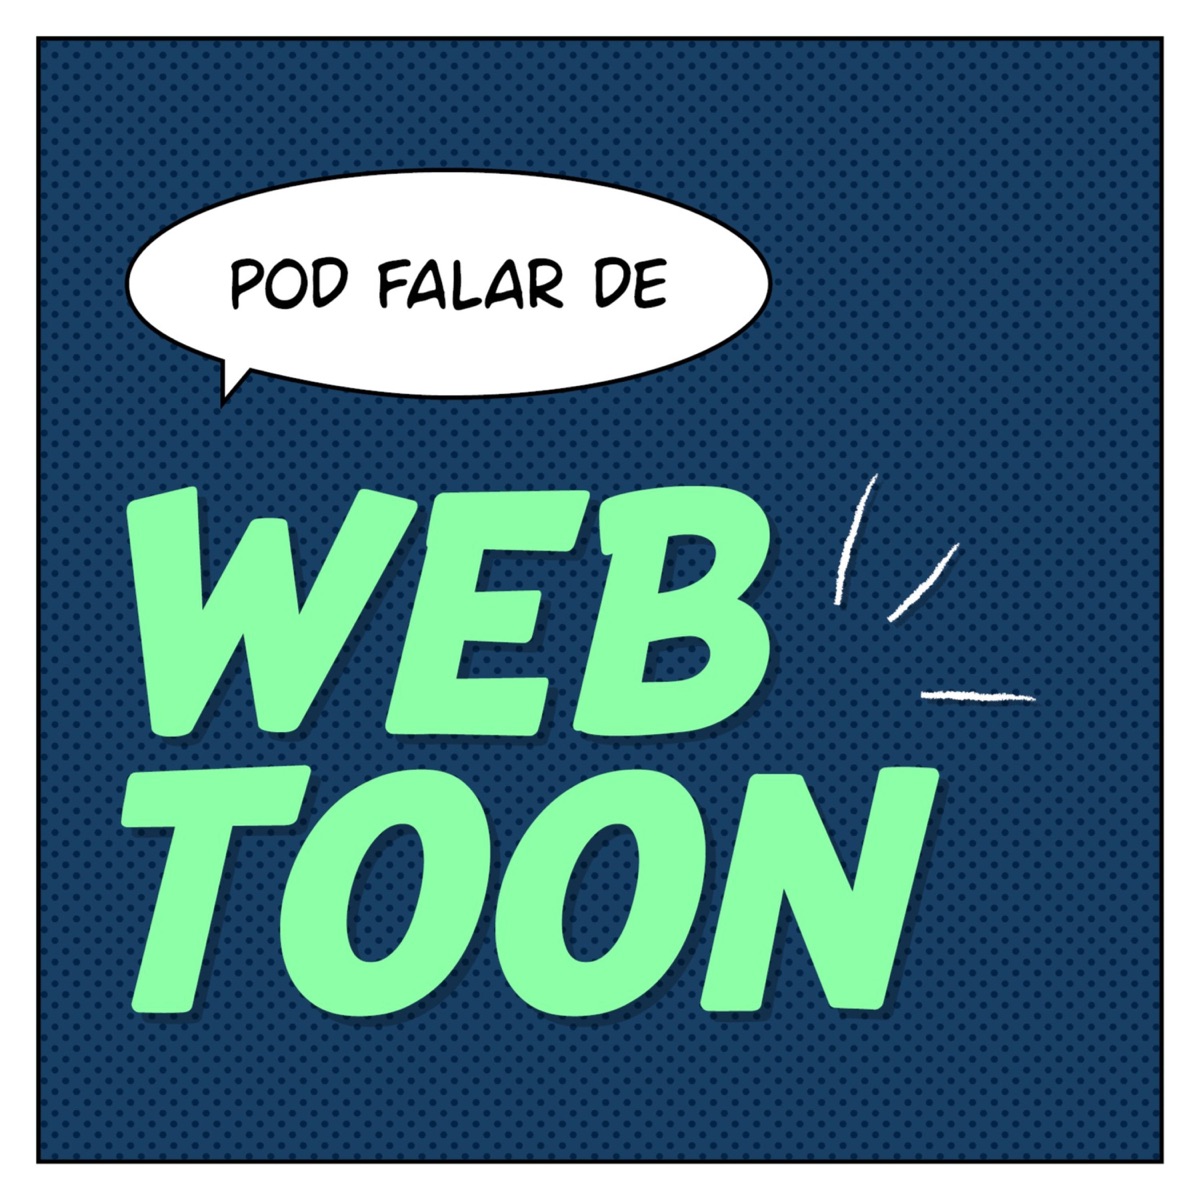 Webtoon Com Protagonista OP!  Webtoon, Webtoon comics, Manhwa manga